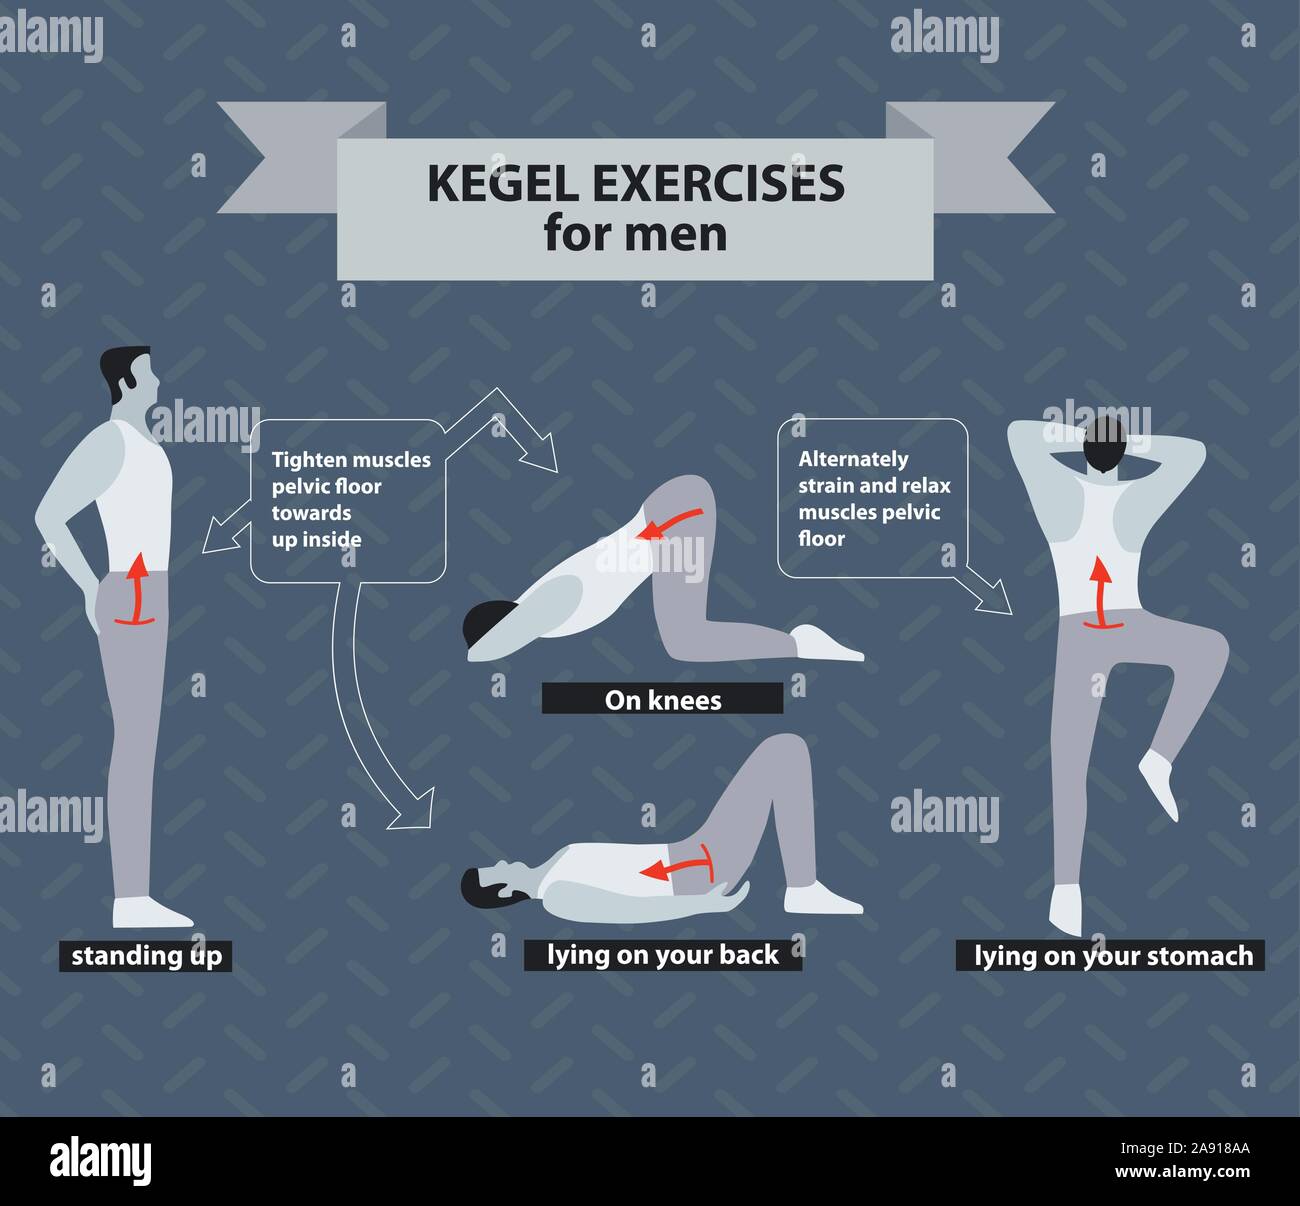 Pelvic floor exercises for men. Kegel gymnastics illustrarion on grey background. Man's health concept. Stock Vector